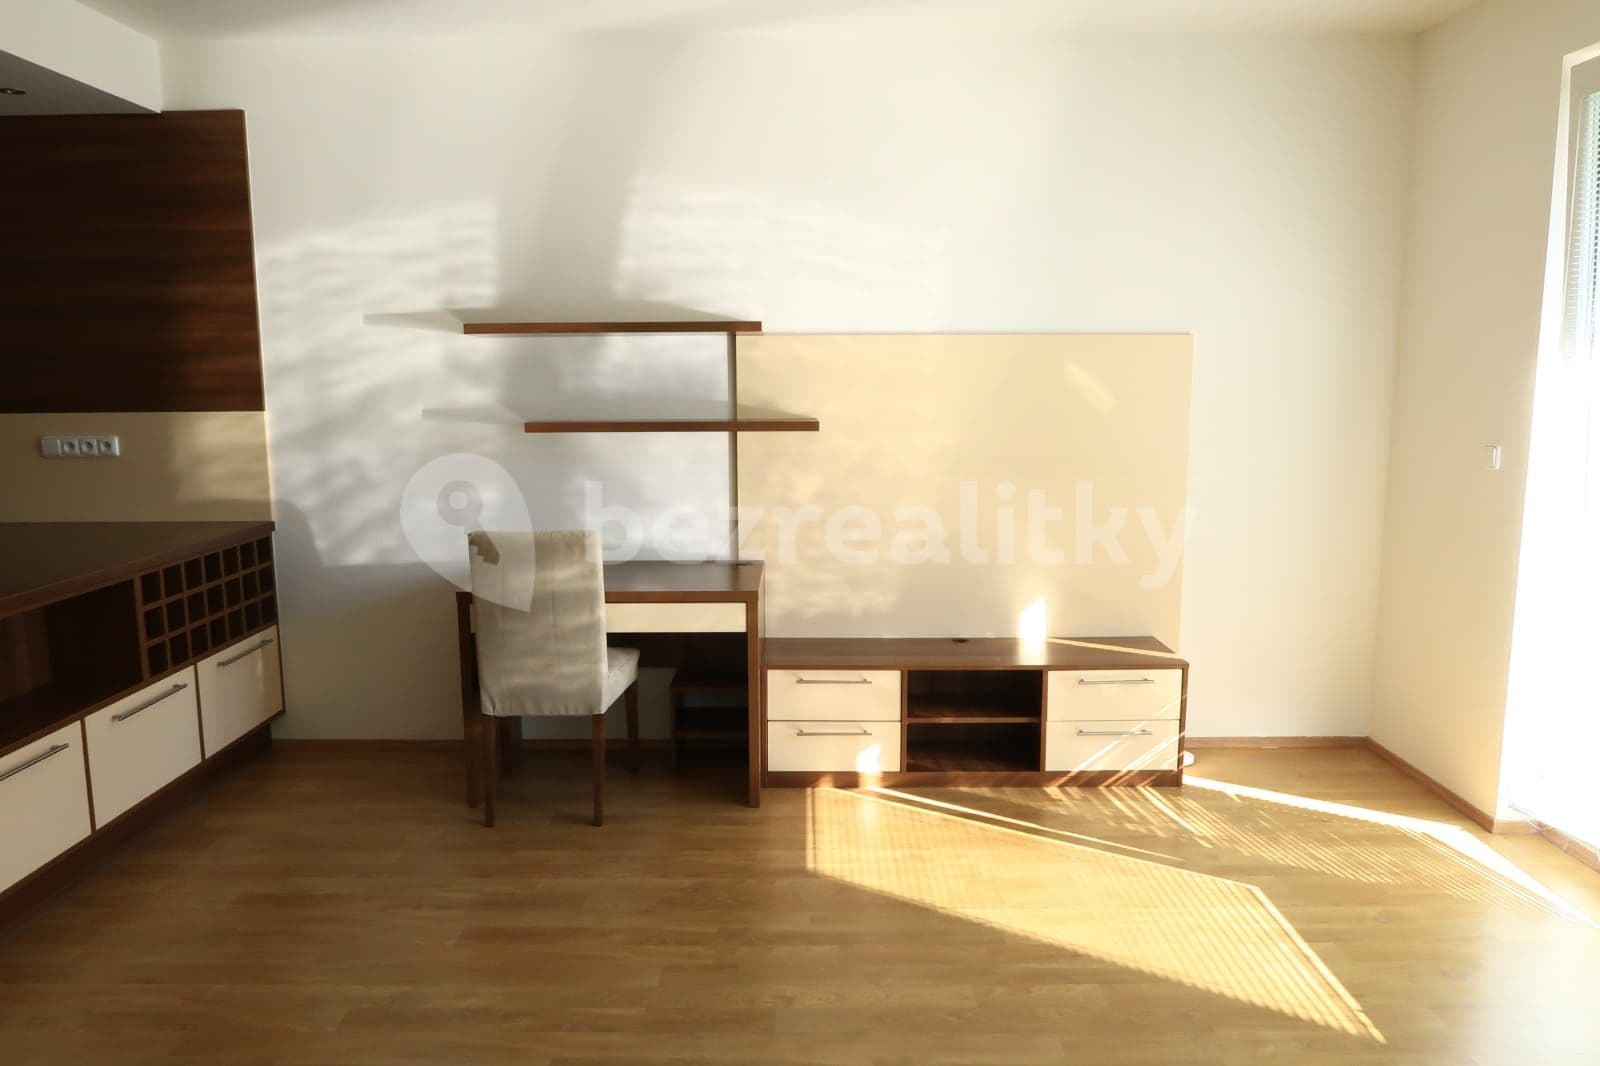 2 bedroom with open-plan kitchen flat to rent, 80 m², Sazovická, Prague, Prague